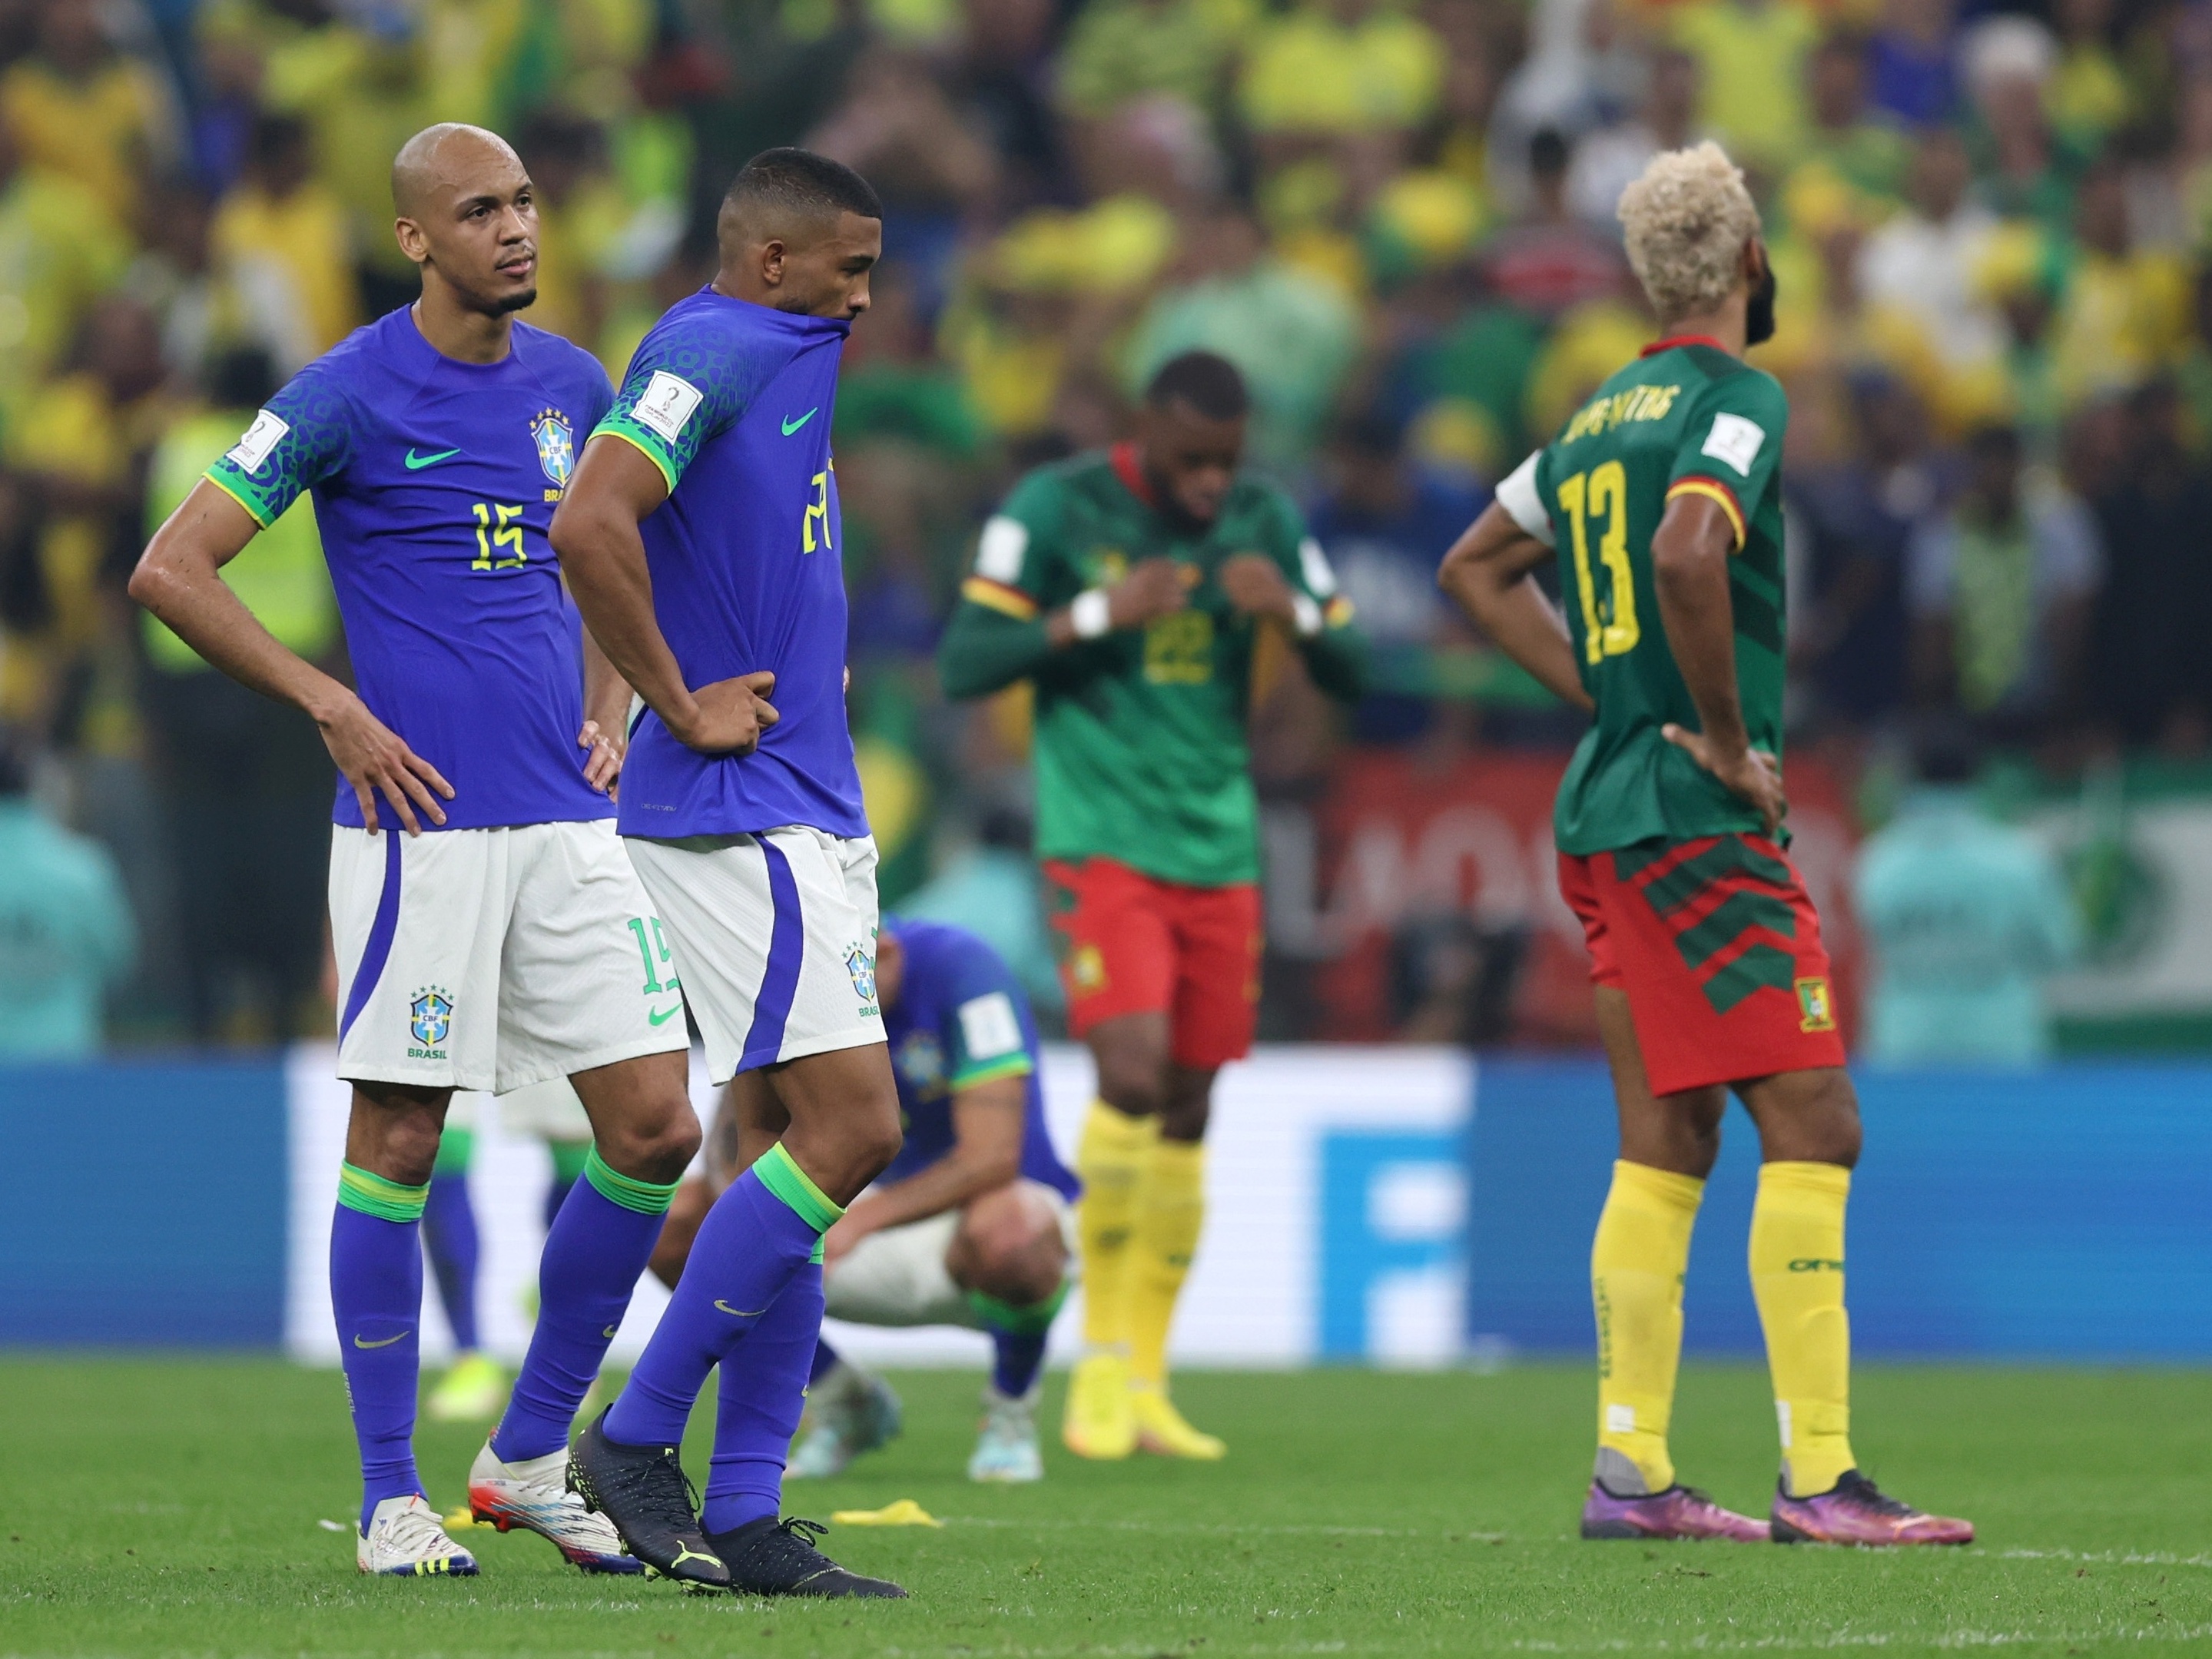 Fifa e governo africano esconderam mazelas 'sob o tapete' na Copa